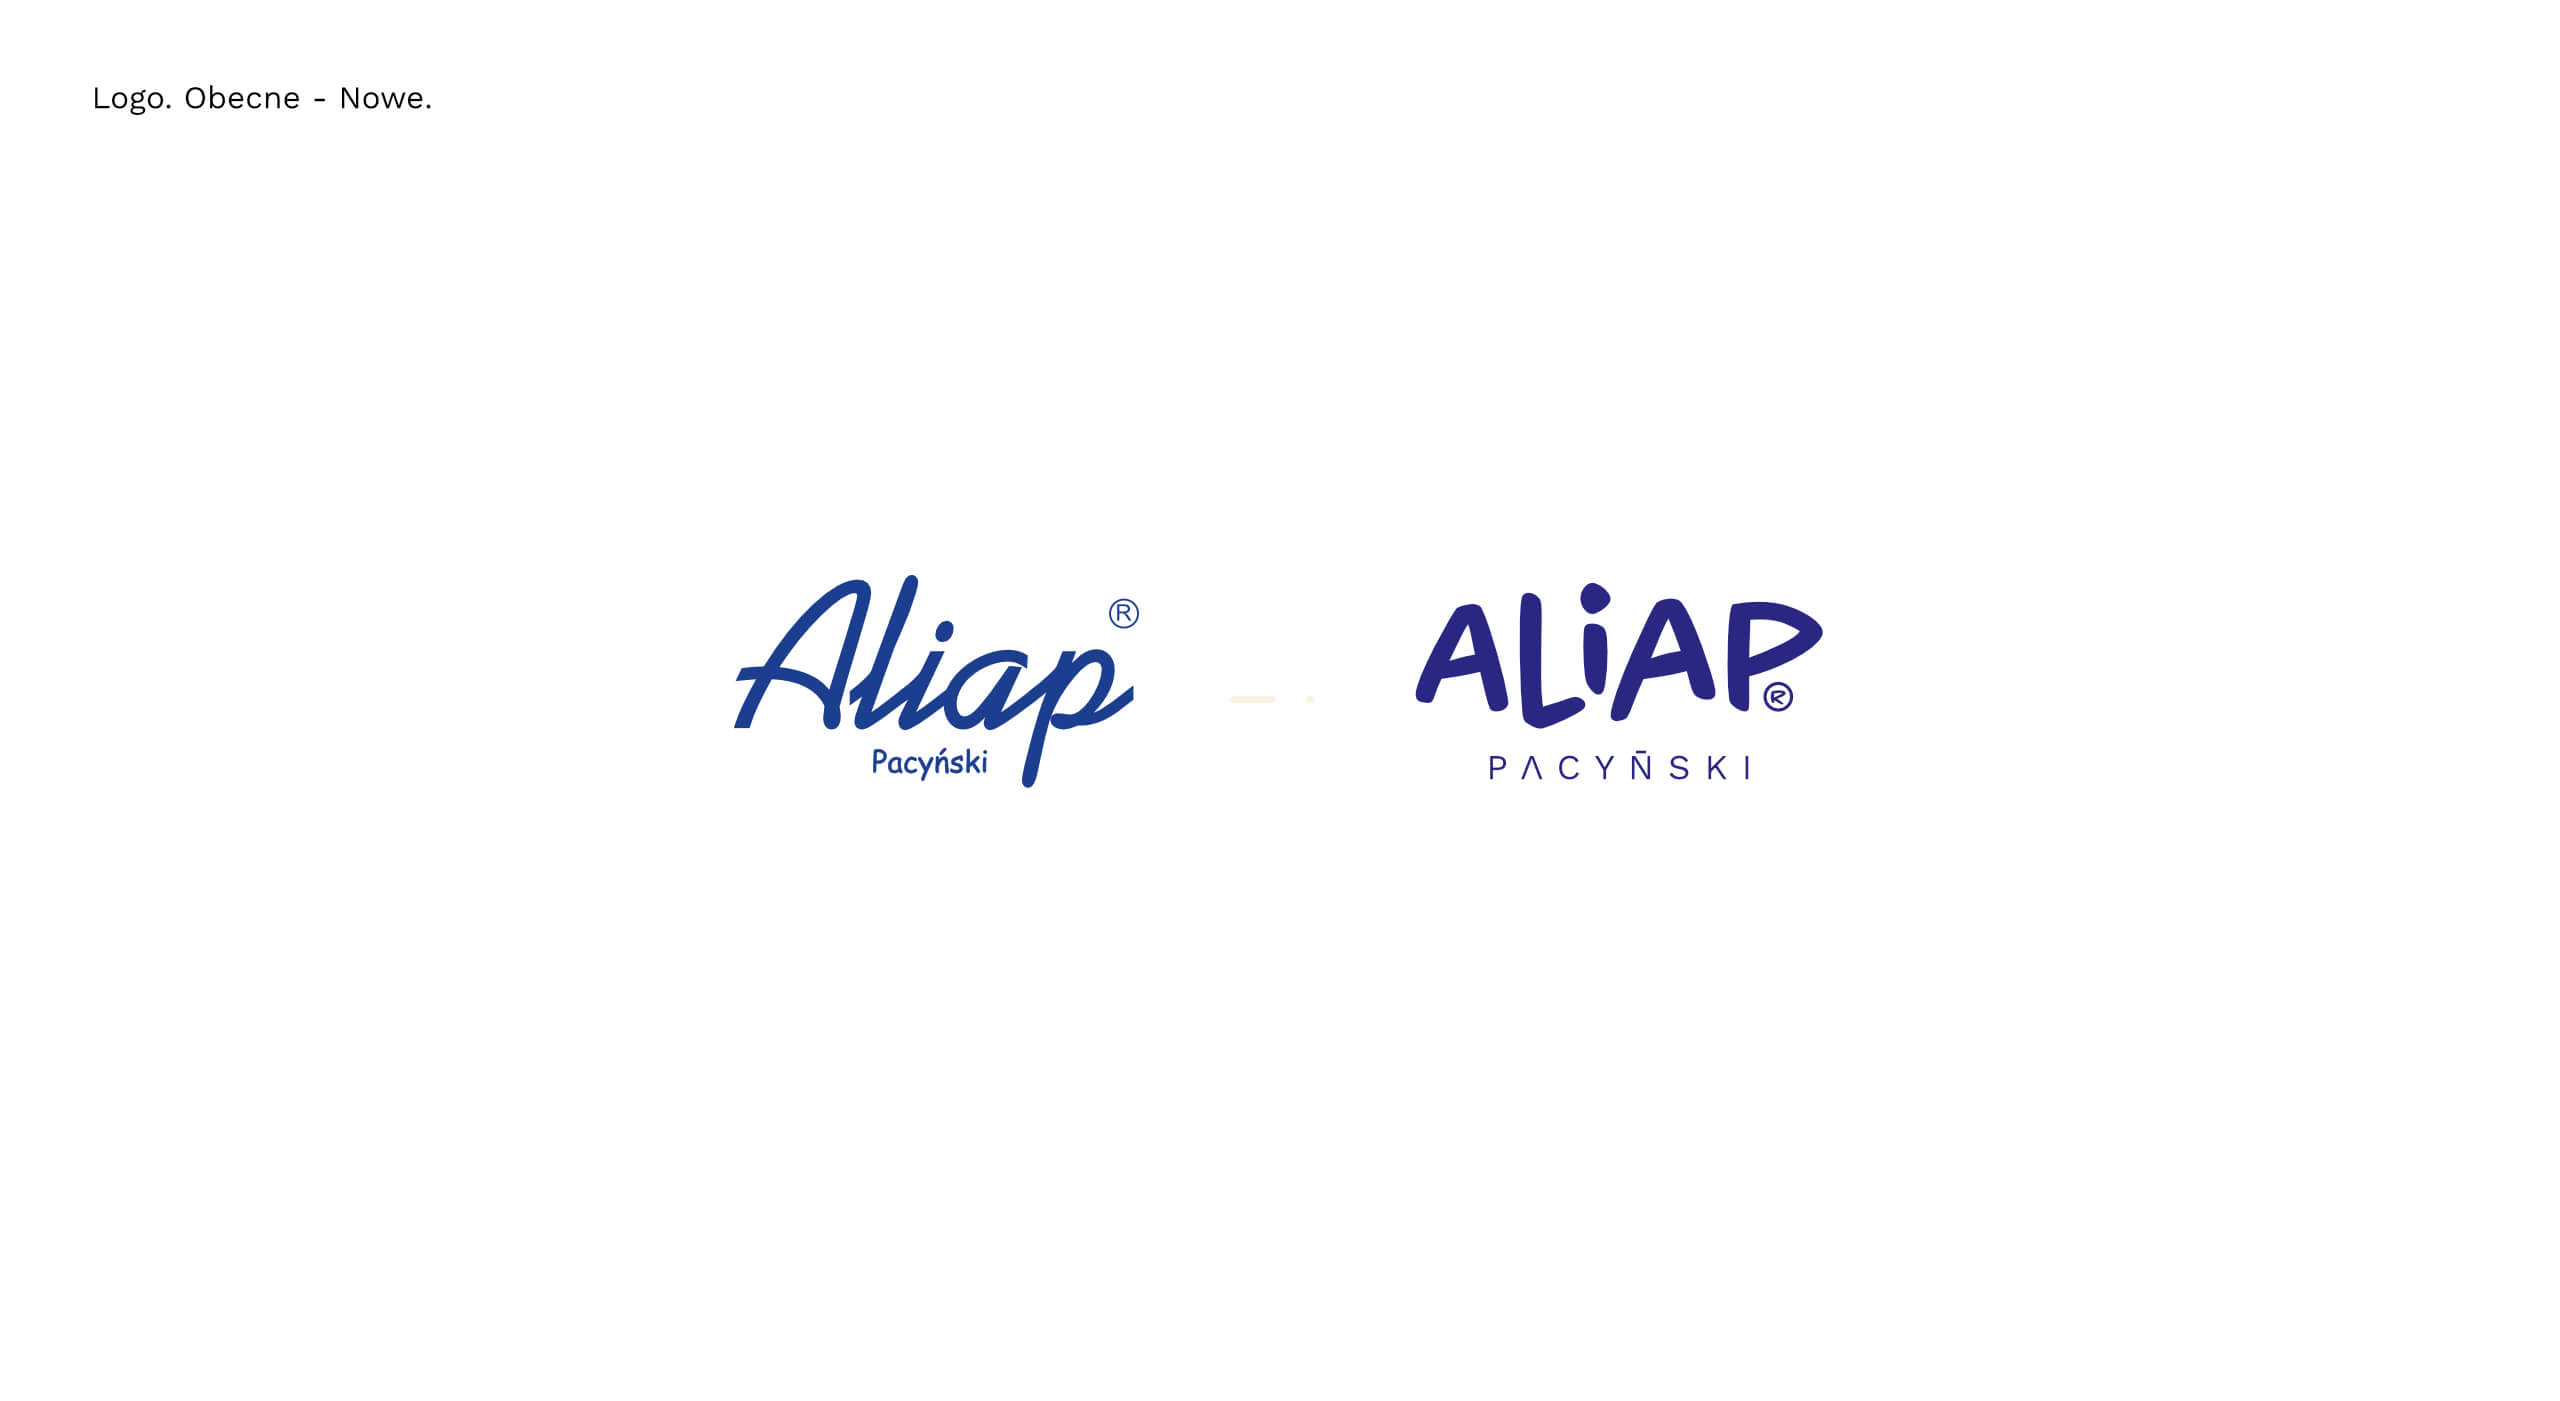 Aliap - Nowe logo